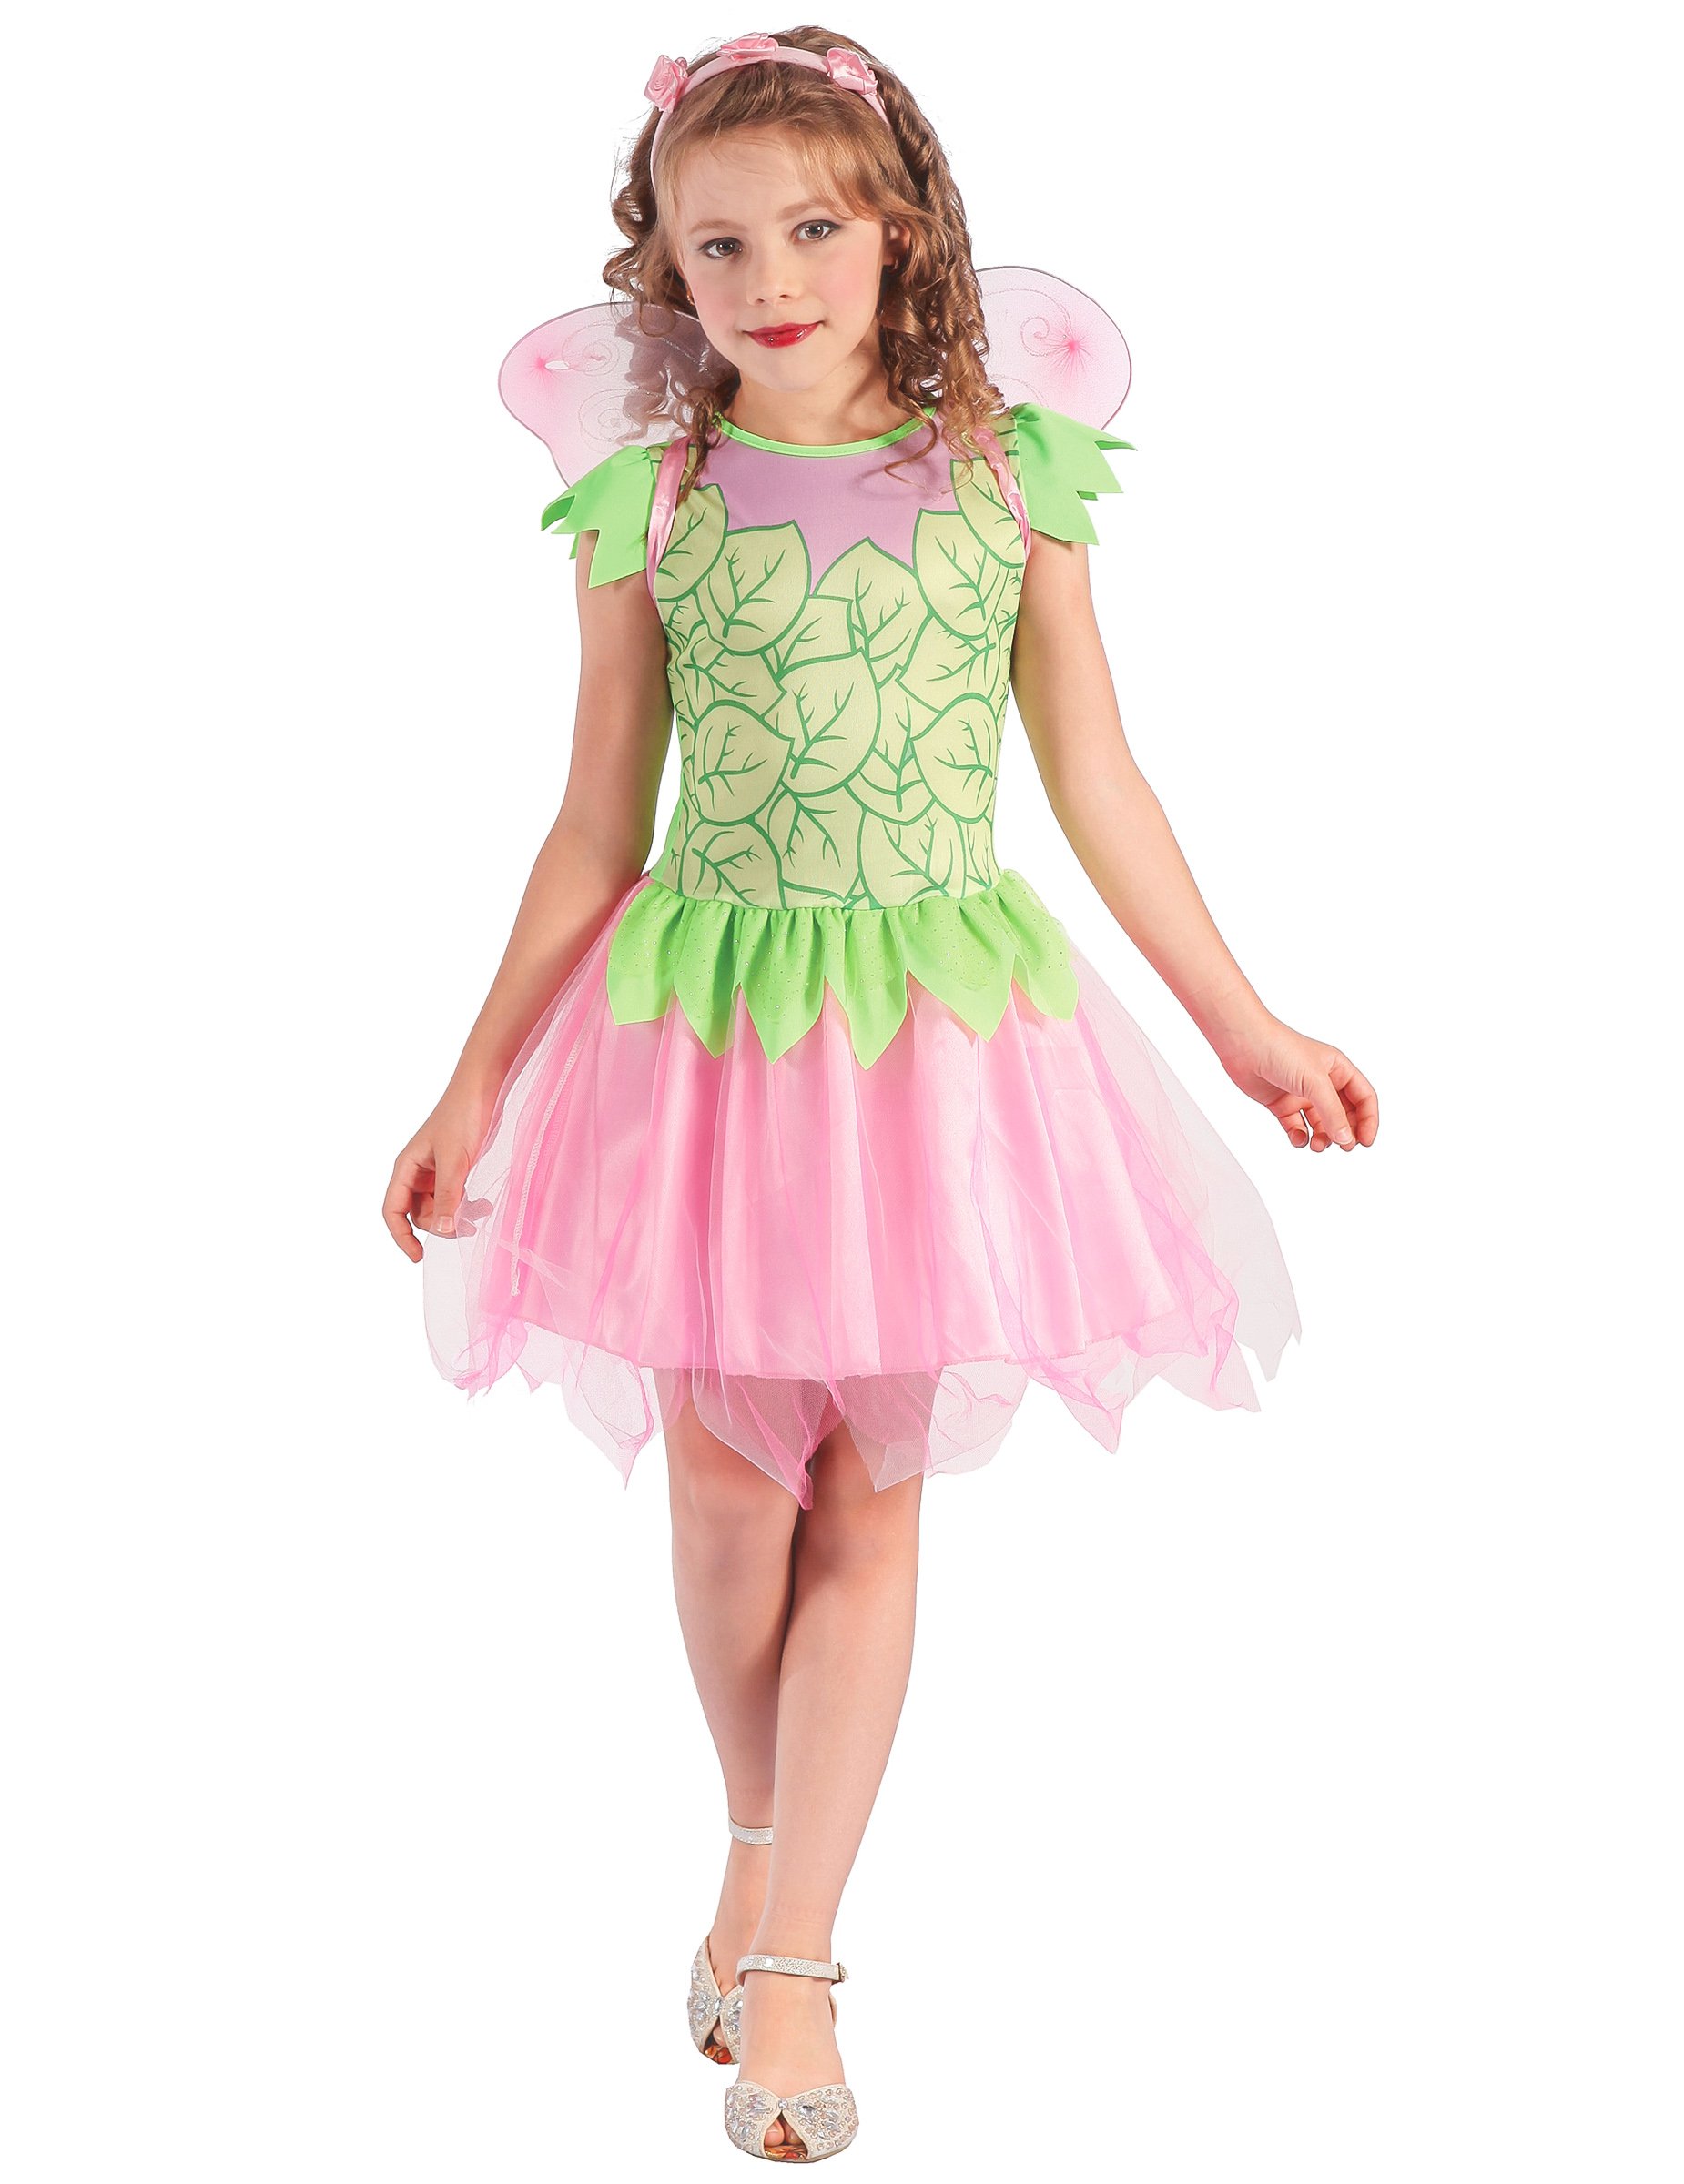 Fee Kinder-Kostüm grün-rosa von KARNEVAL-MEGASTORE